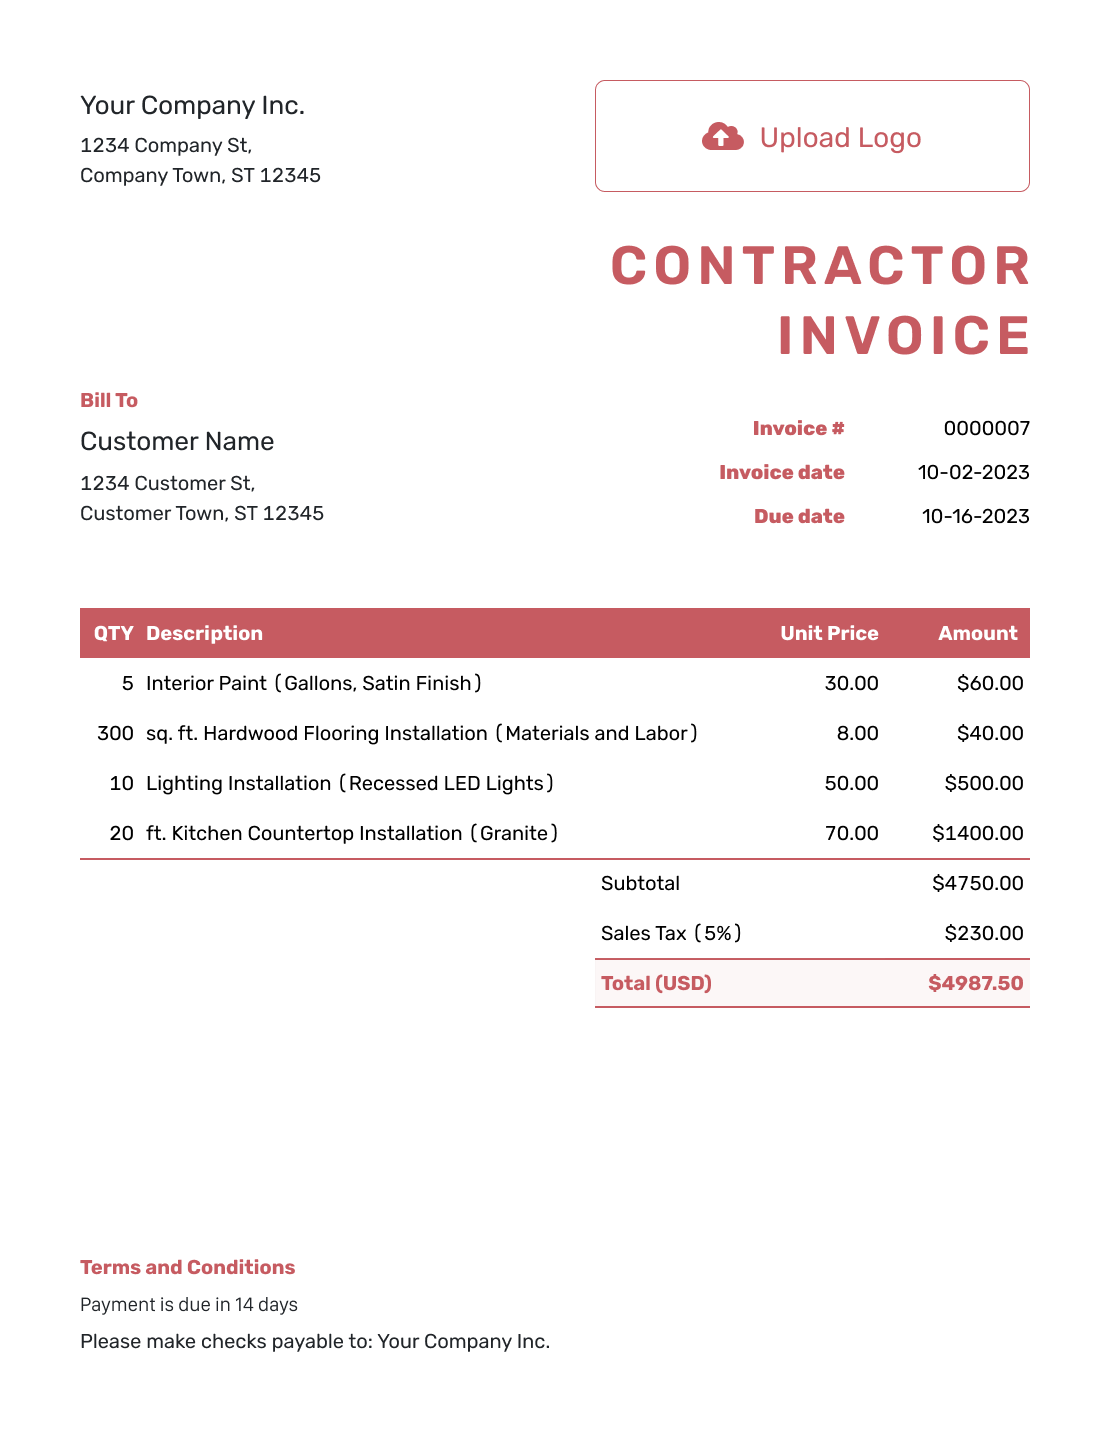 Itemized Contractor Invoice Template